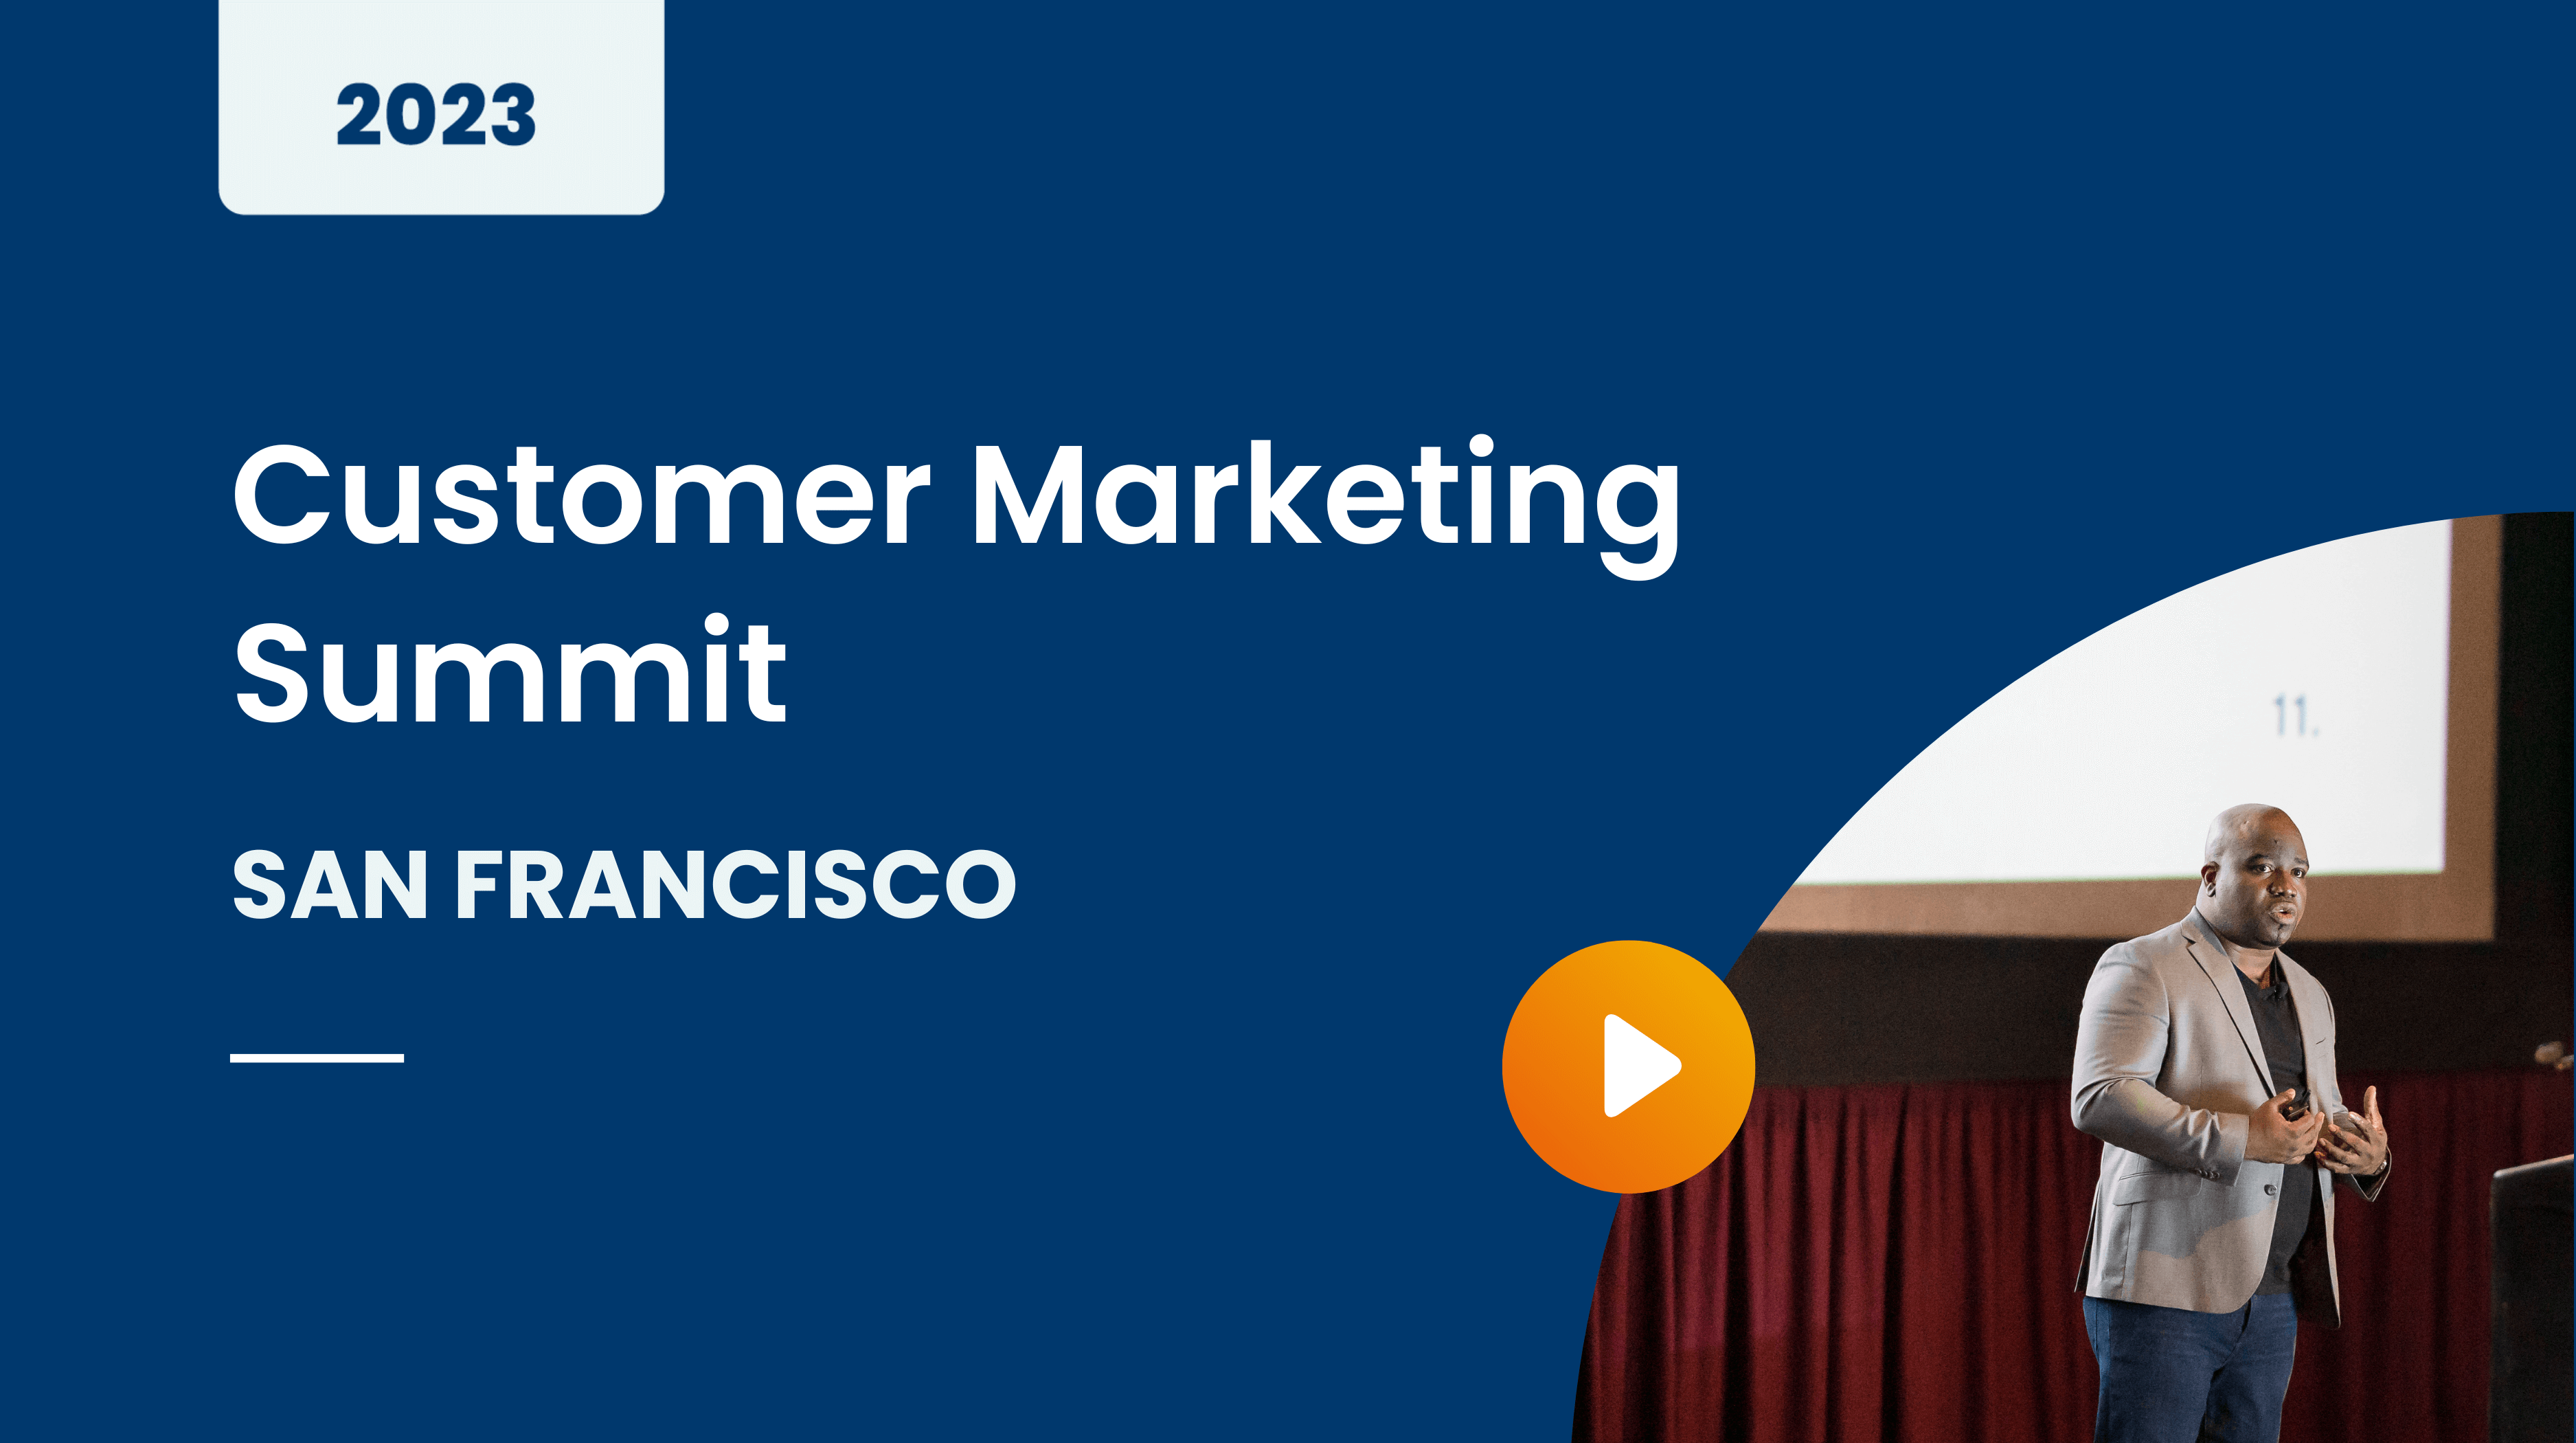 Customer Marketing Summit San Francisco 2023